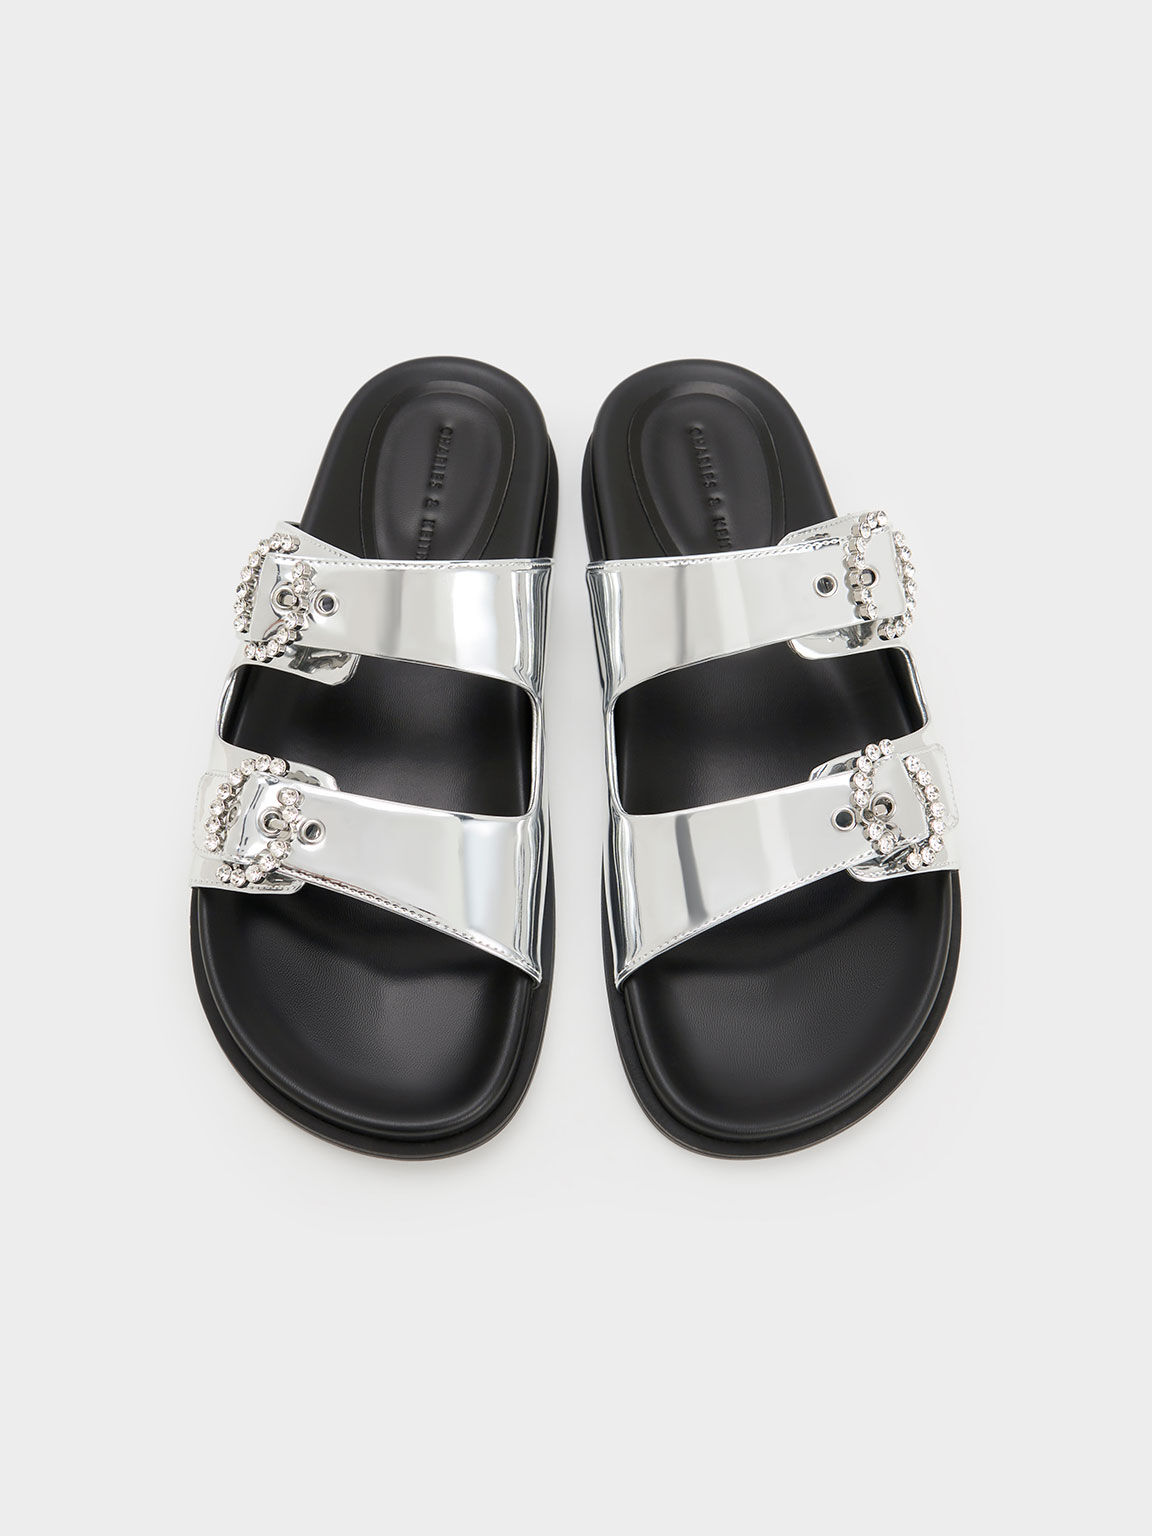 Silver Embellished Buckle Metallic Sandals - CHARLES & KEITH DK